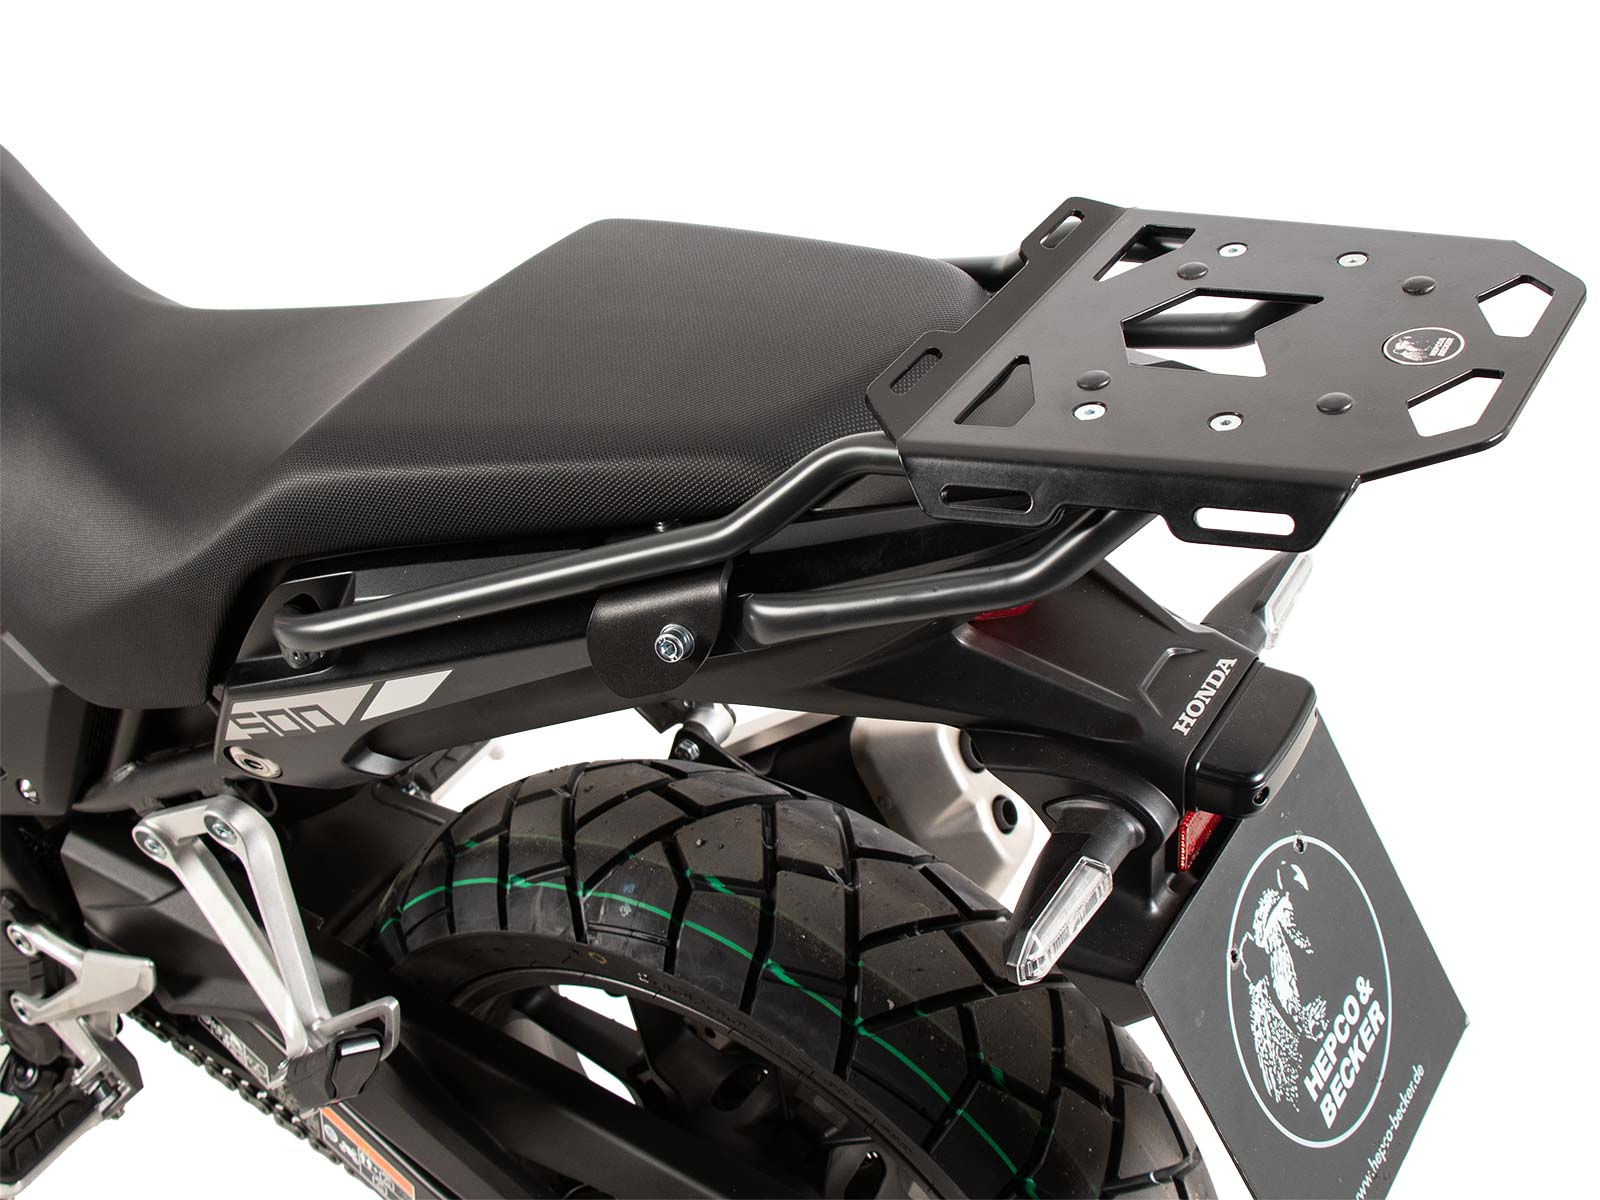 Minirack soft luggage rear rack for Honda CB 500 X (2013-2016)